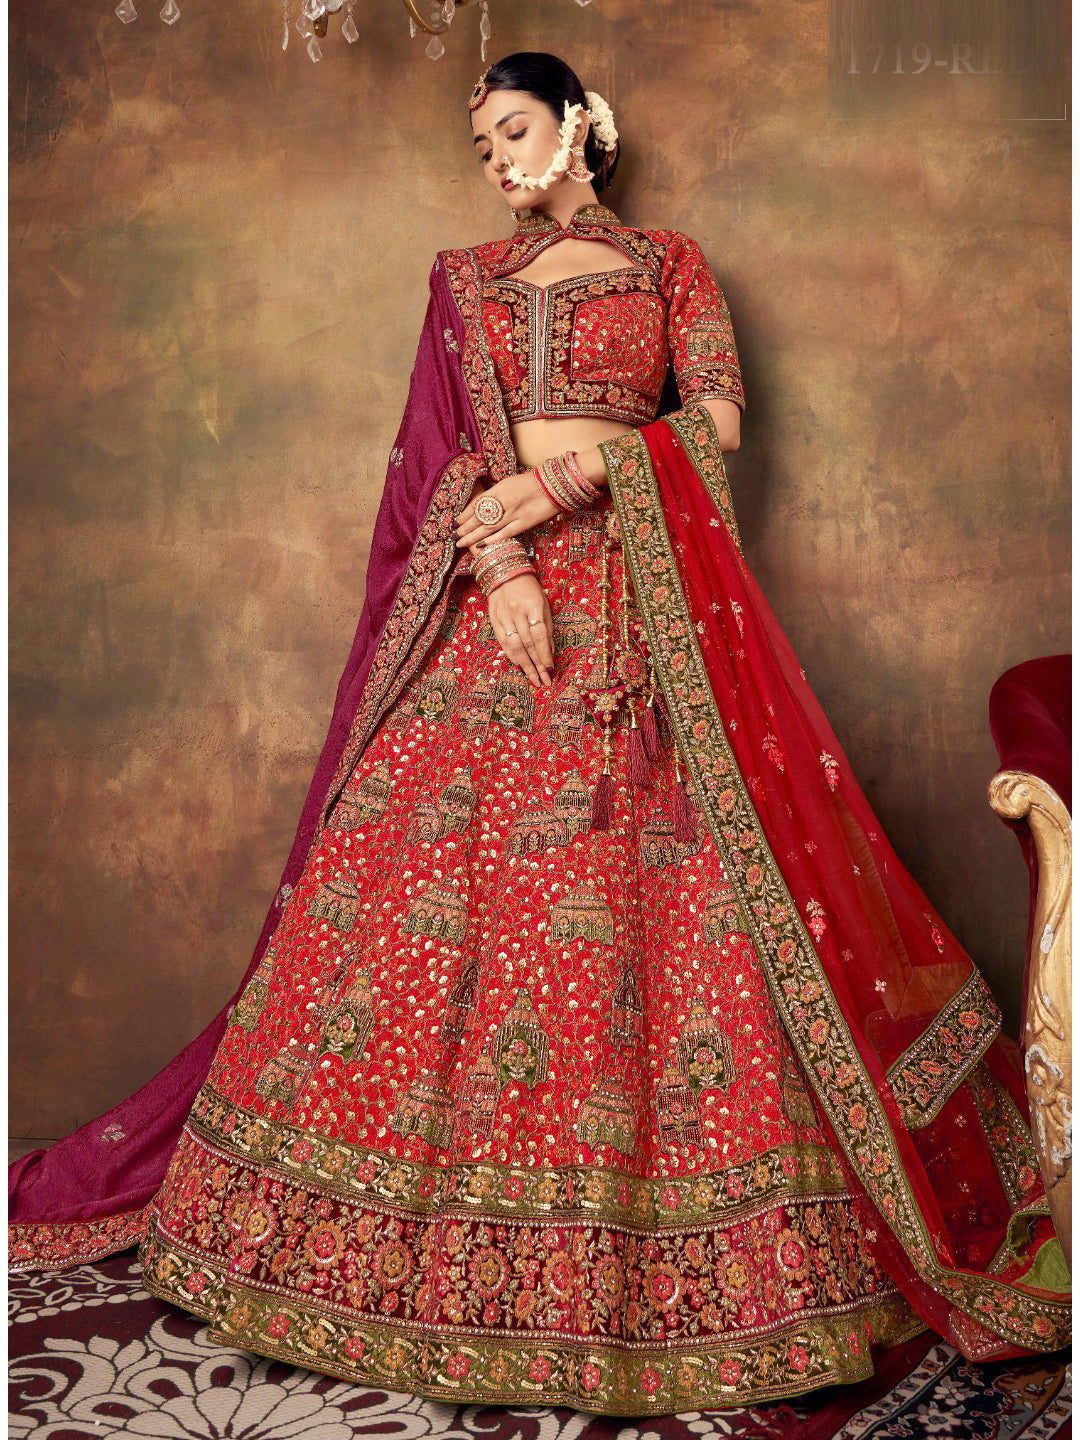 Bridal Red Lehenga Choli Indian Lengha Chunni Designer Lehanga Skirt Top  Dress | eBay